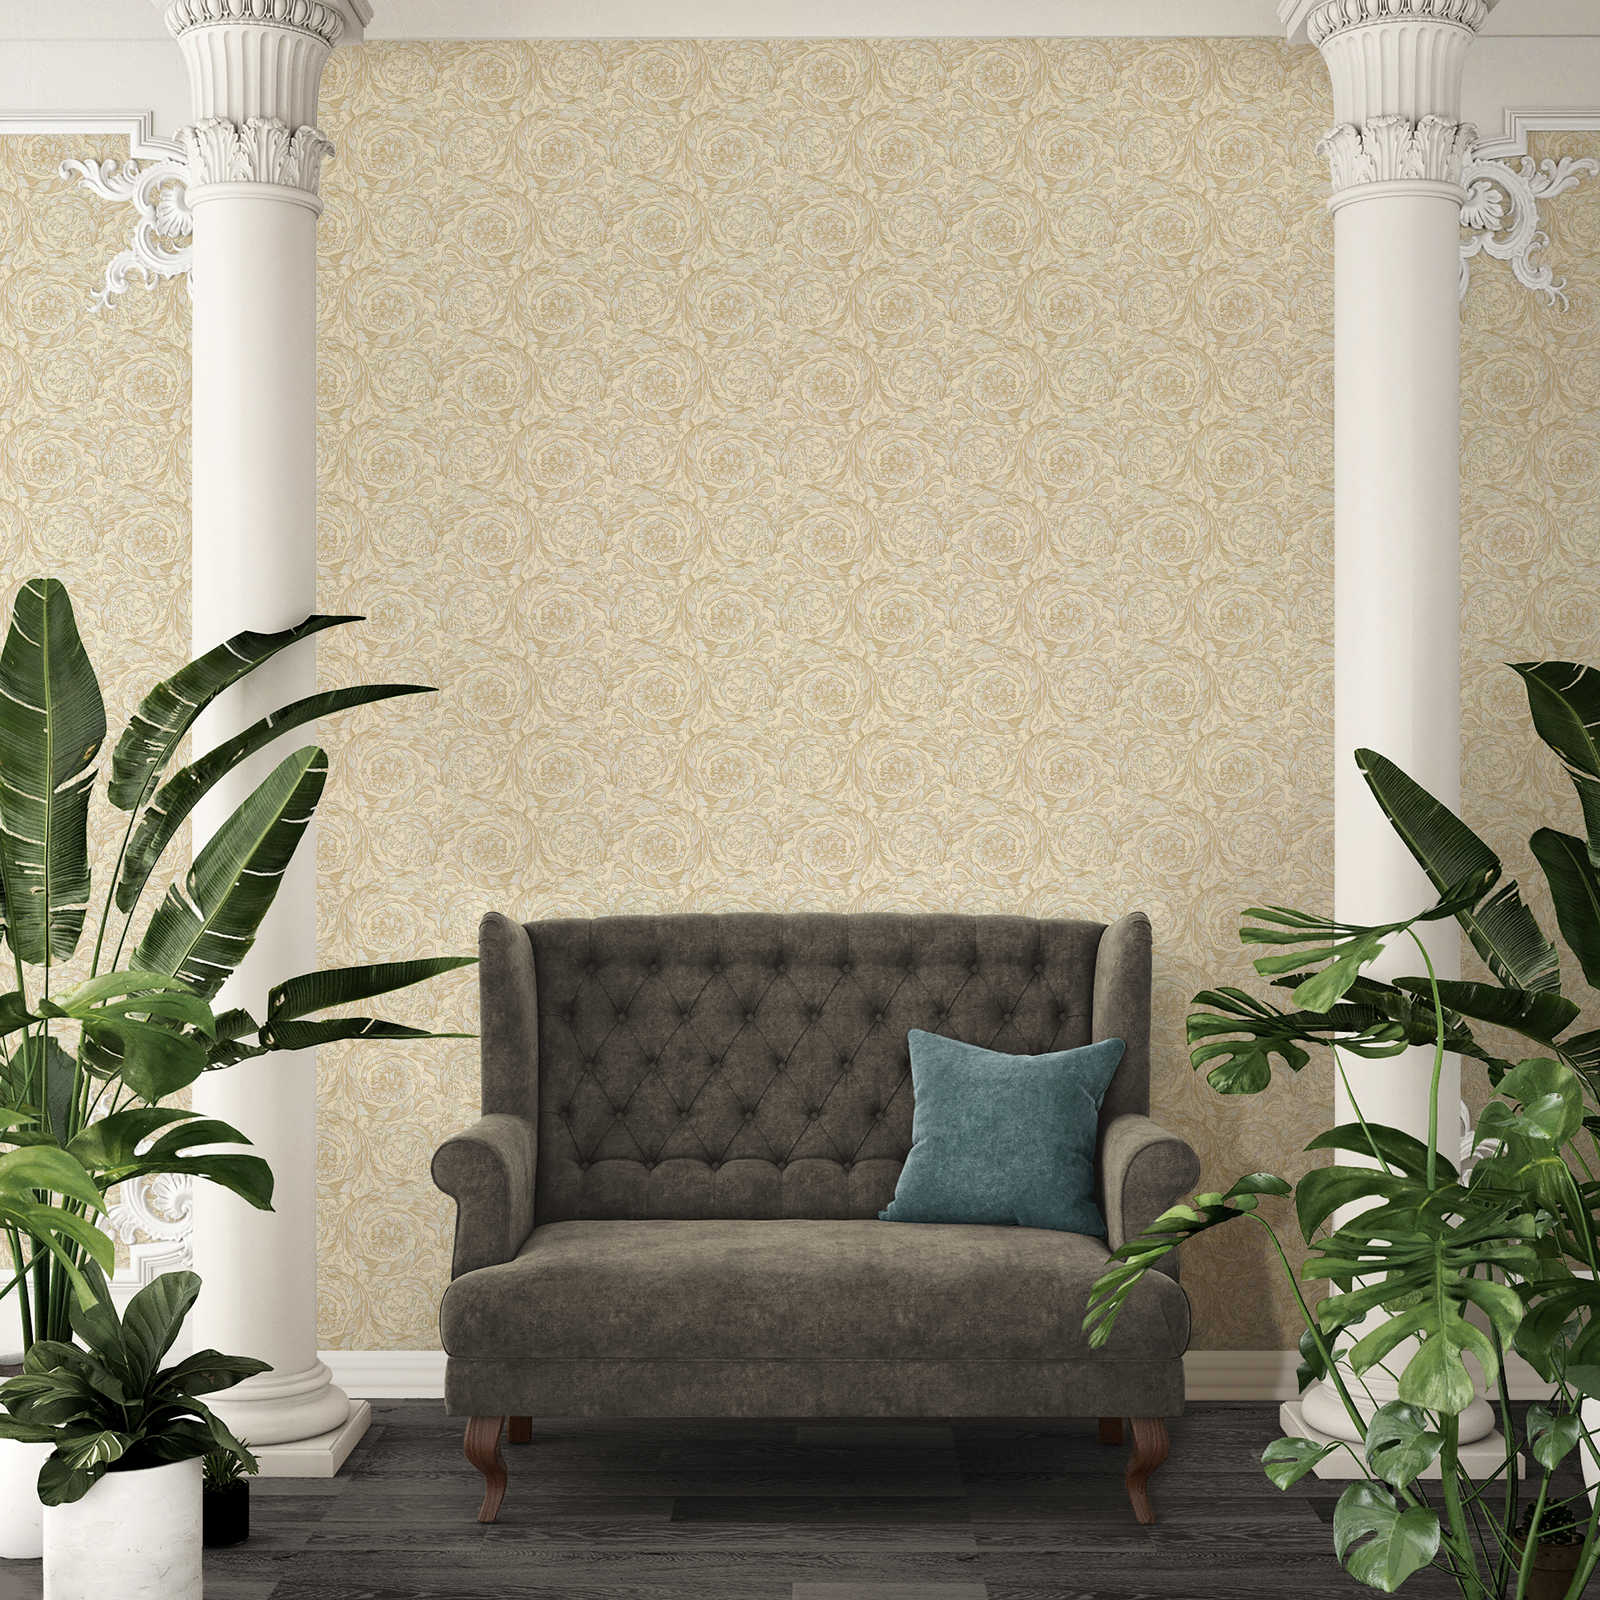             Opulent non-woven wallpaper with metallic ornaments - beige
        